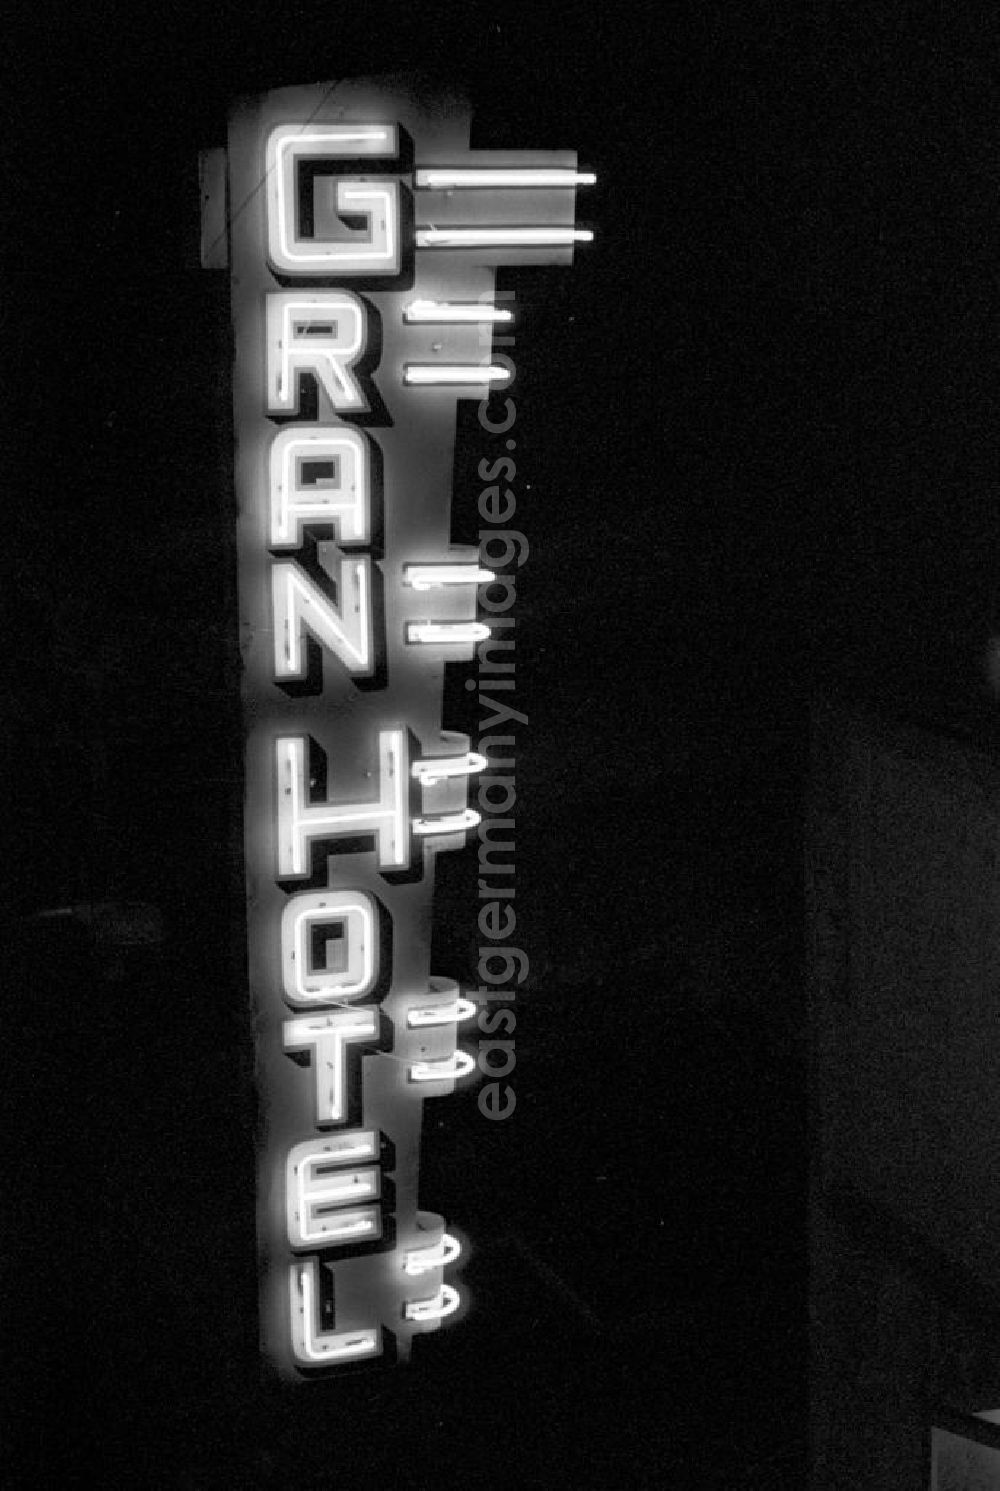 GDR picture archive: Camagüey - Leuchtschrift des Gran Hotel in Camagüey.